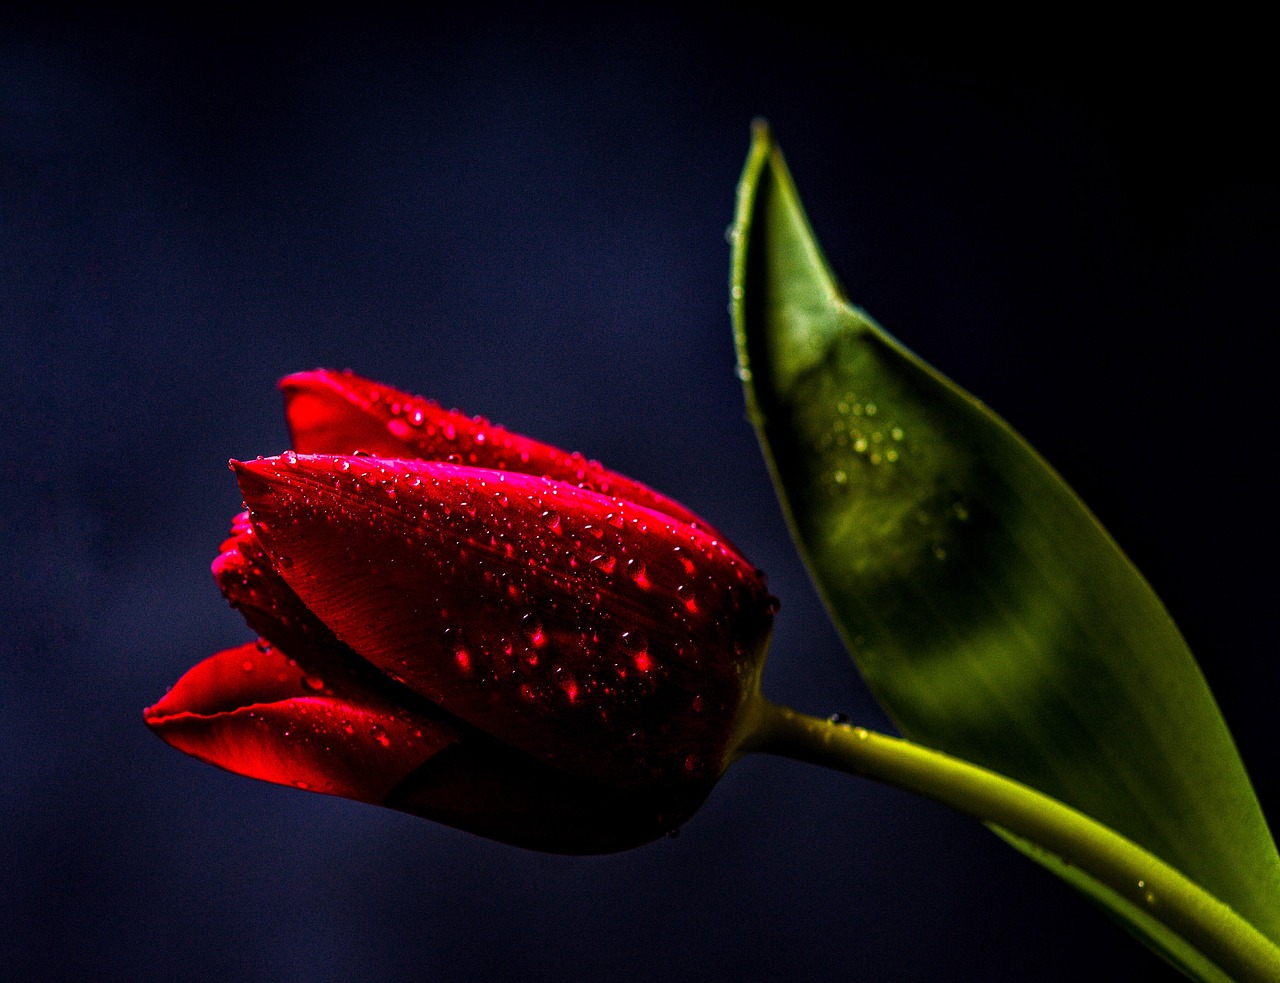 Red tulip on a black background, symbolizing life, death, and hidden danger in a suspenseful narrative.